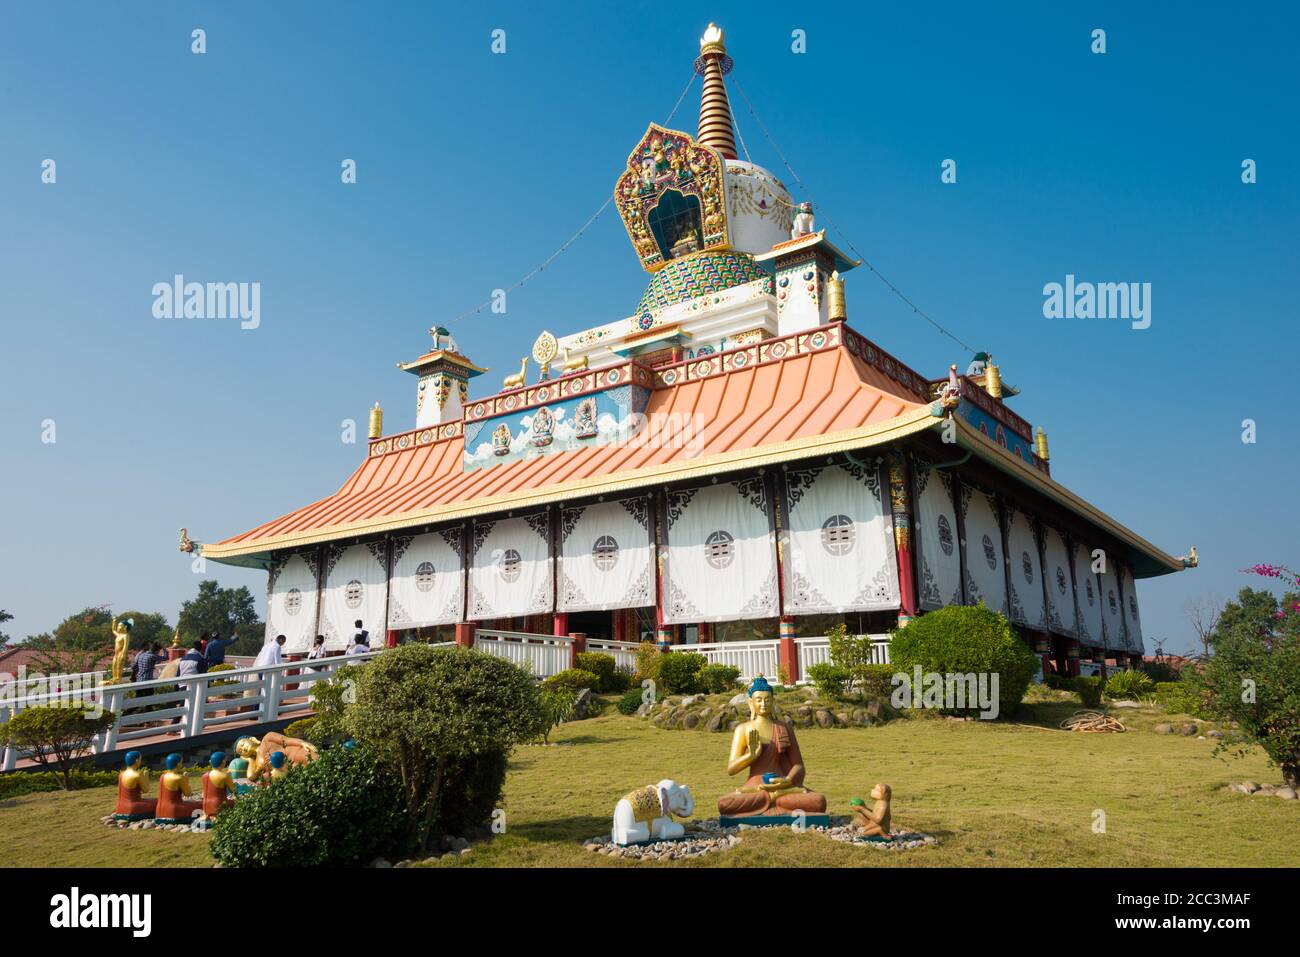 Lumbini, Nepal - The Great Drigung Kagyud Lotus Stupa (German Temple) in Lumbini, Nepal. Stock Photo